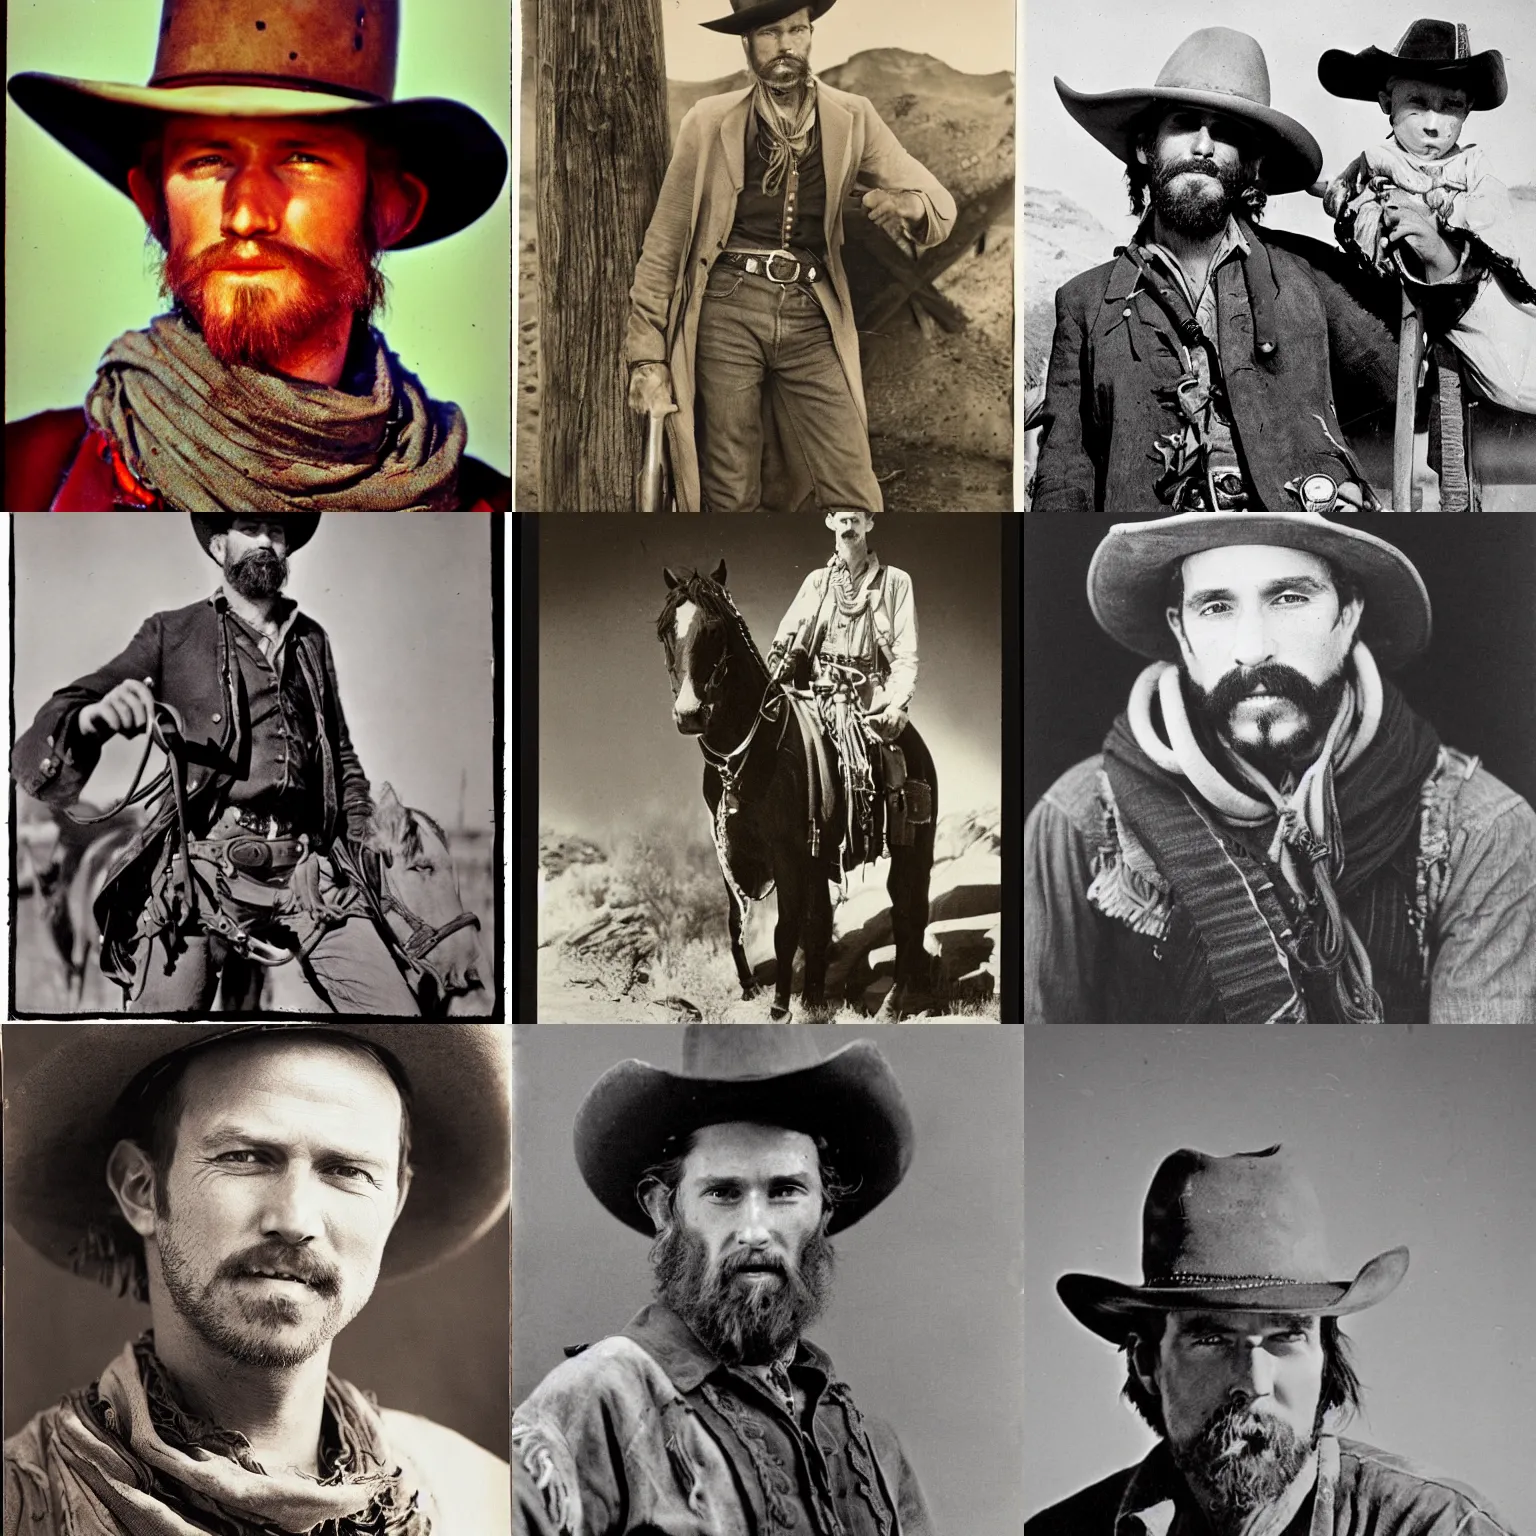 Prompt: image mark zuckerbeg very close photograph, wild west cowboy bytrue west archives